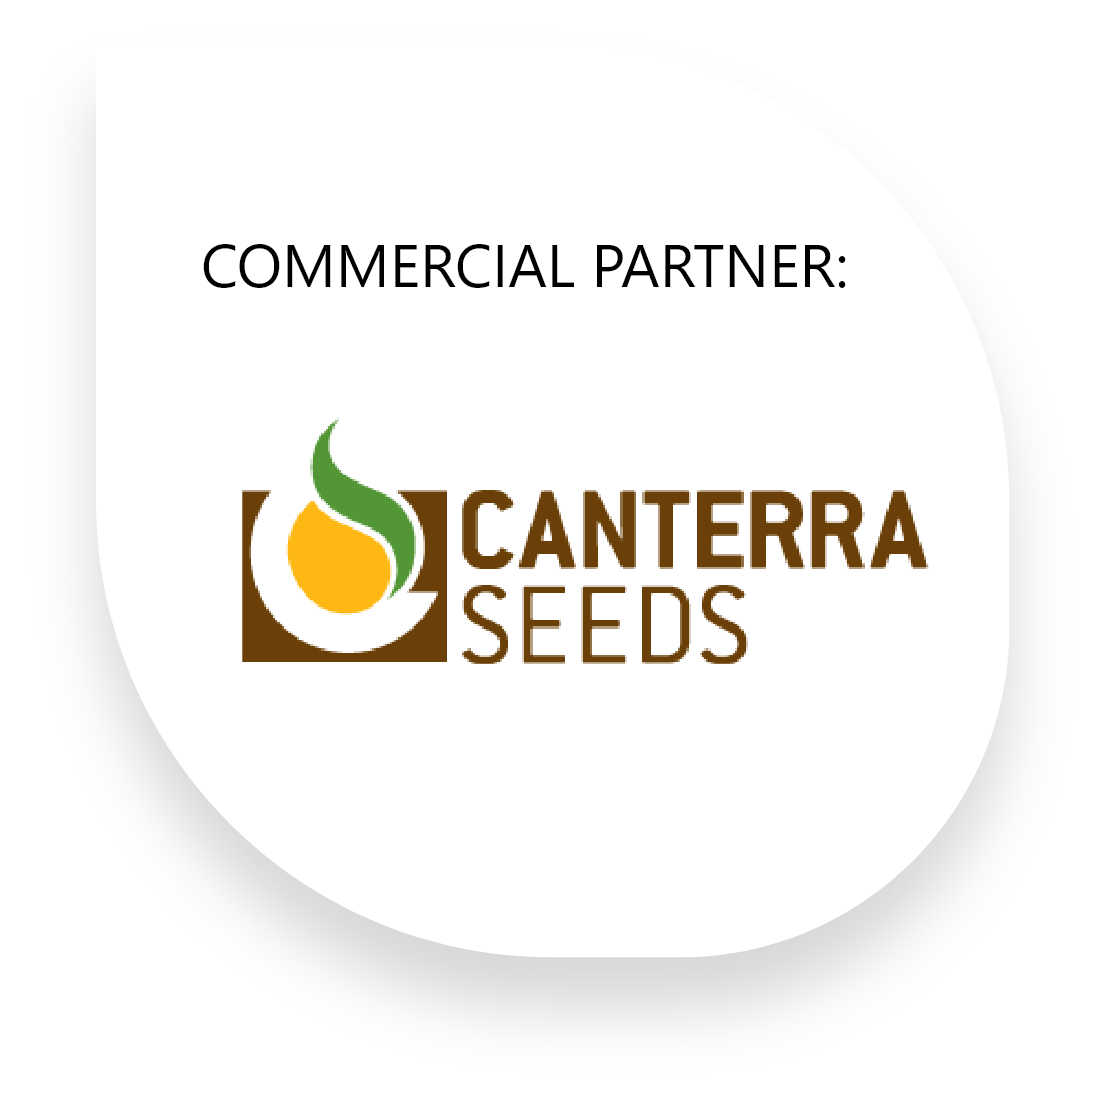 Commercial partner: Canterra Seeds